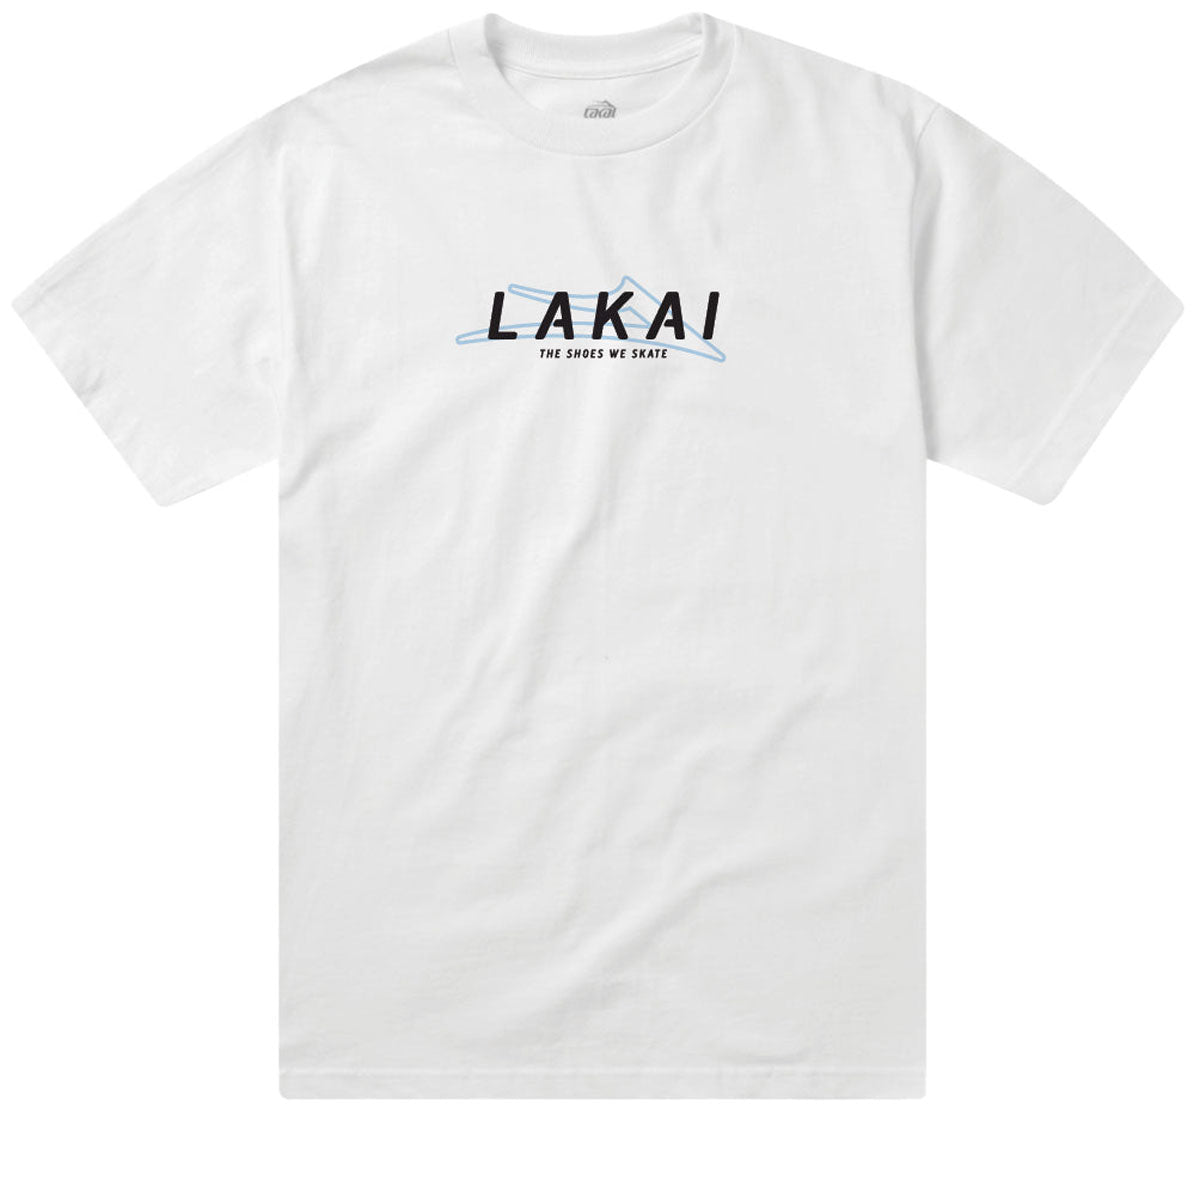 Lakai Stacked T-Shirt - White image 1